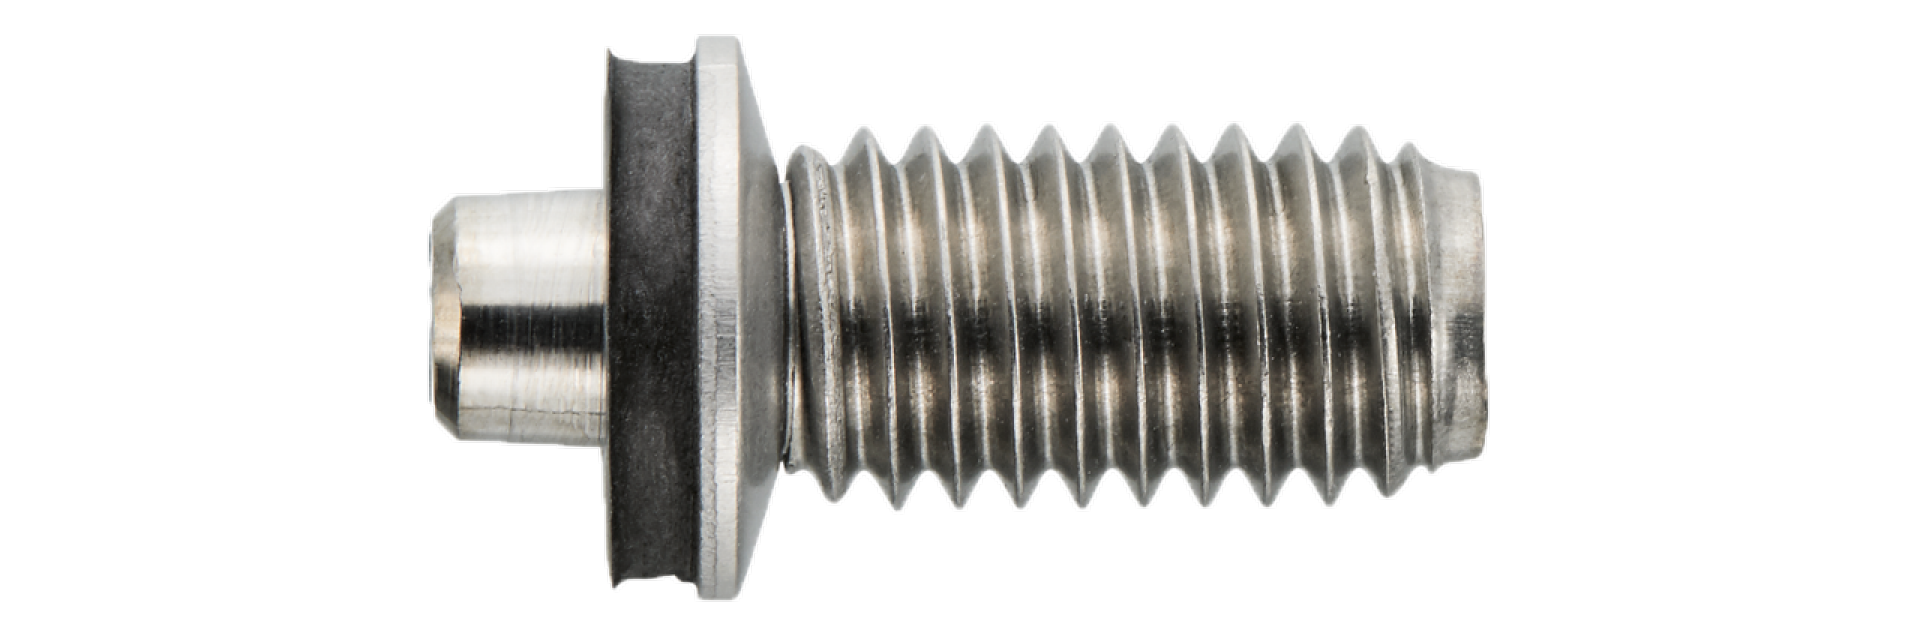 blunt tip fasteners for steel